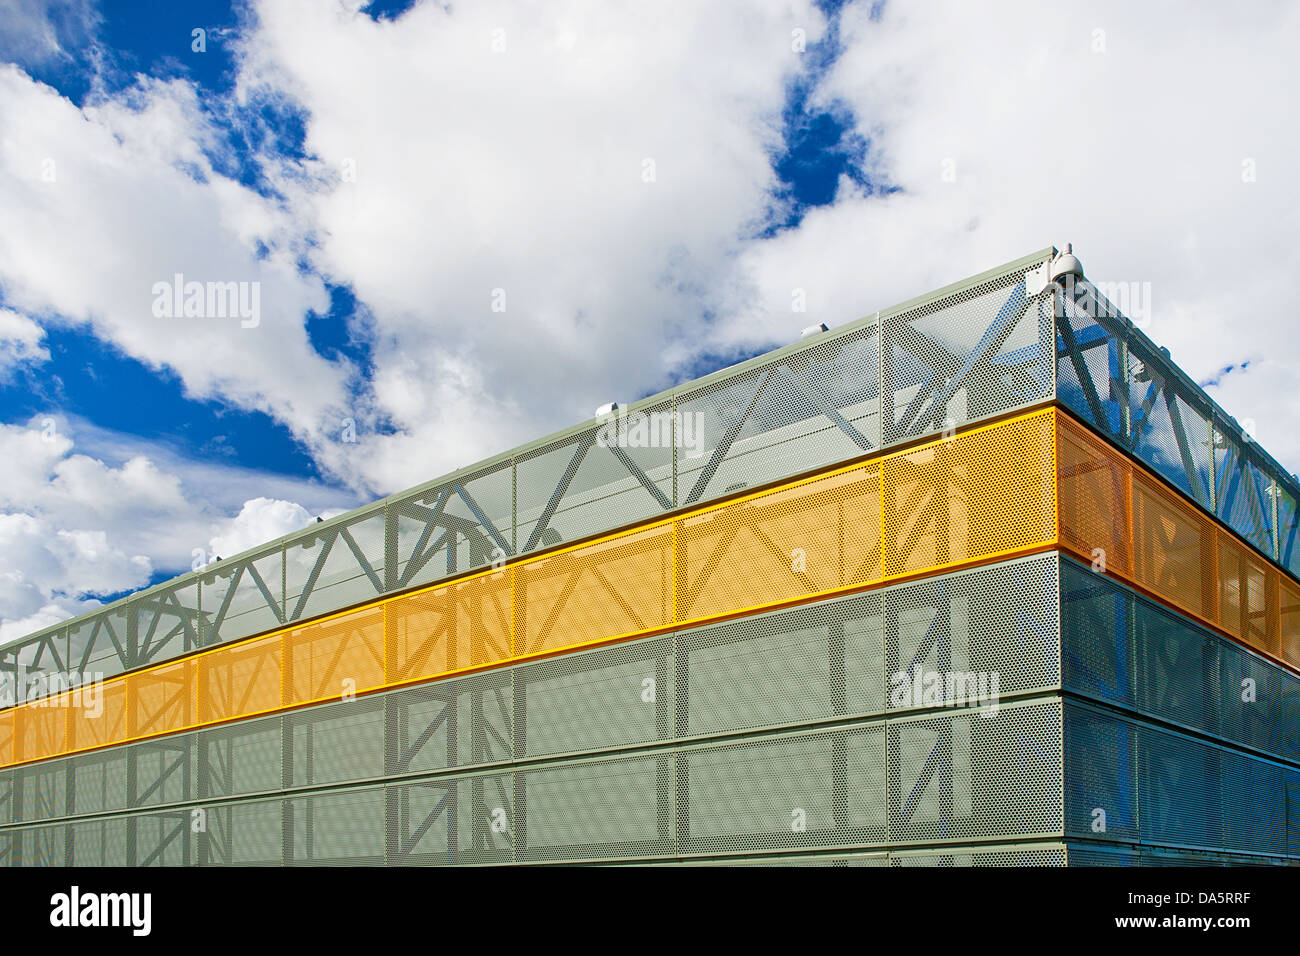 Metal facade of modern industrial building Stock Photo